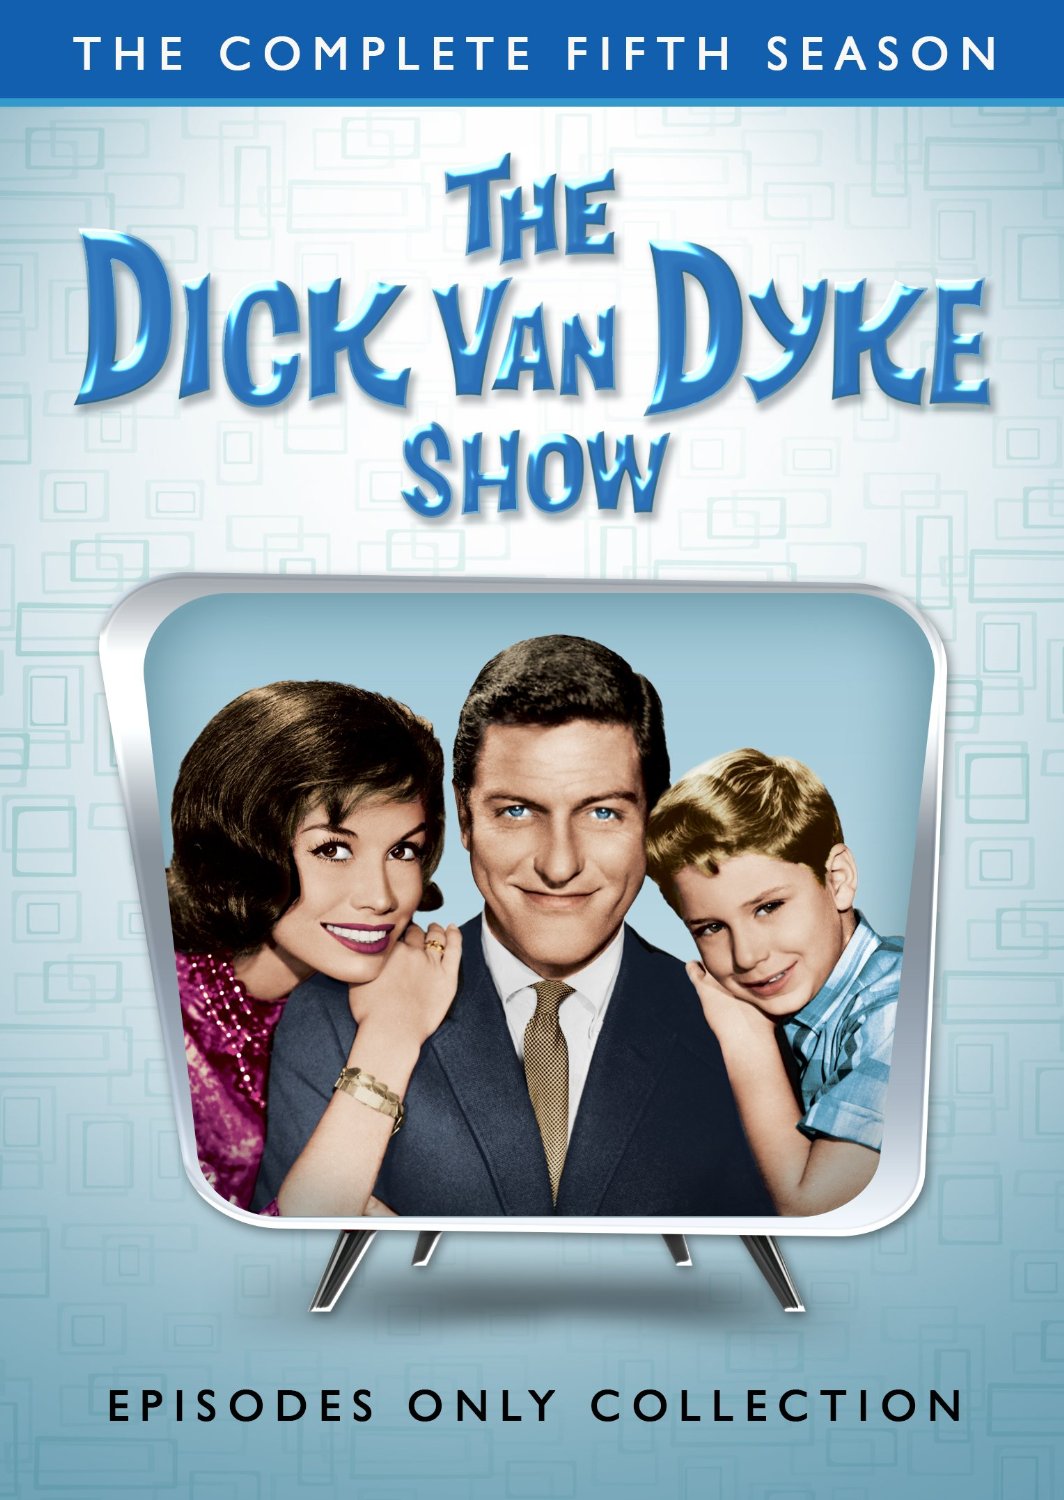 Dick van dyke show with the rock